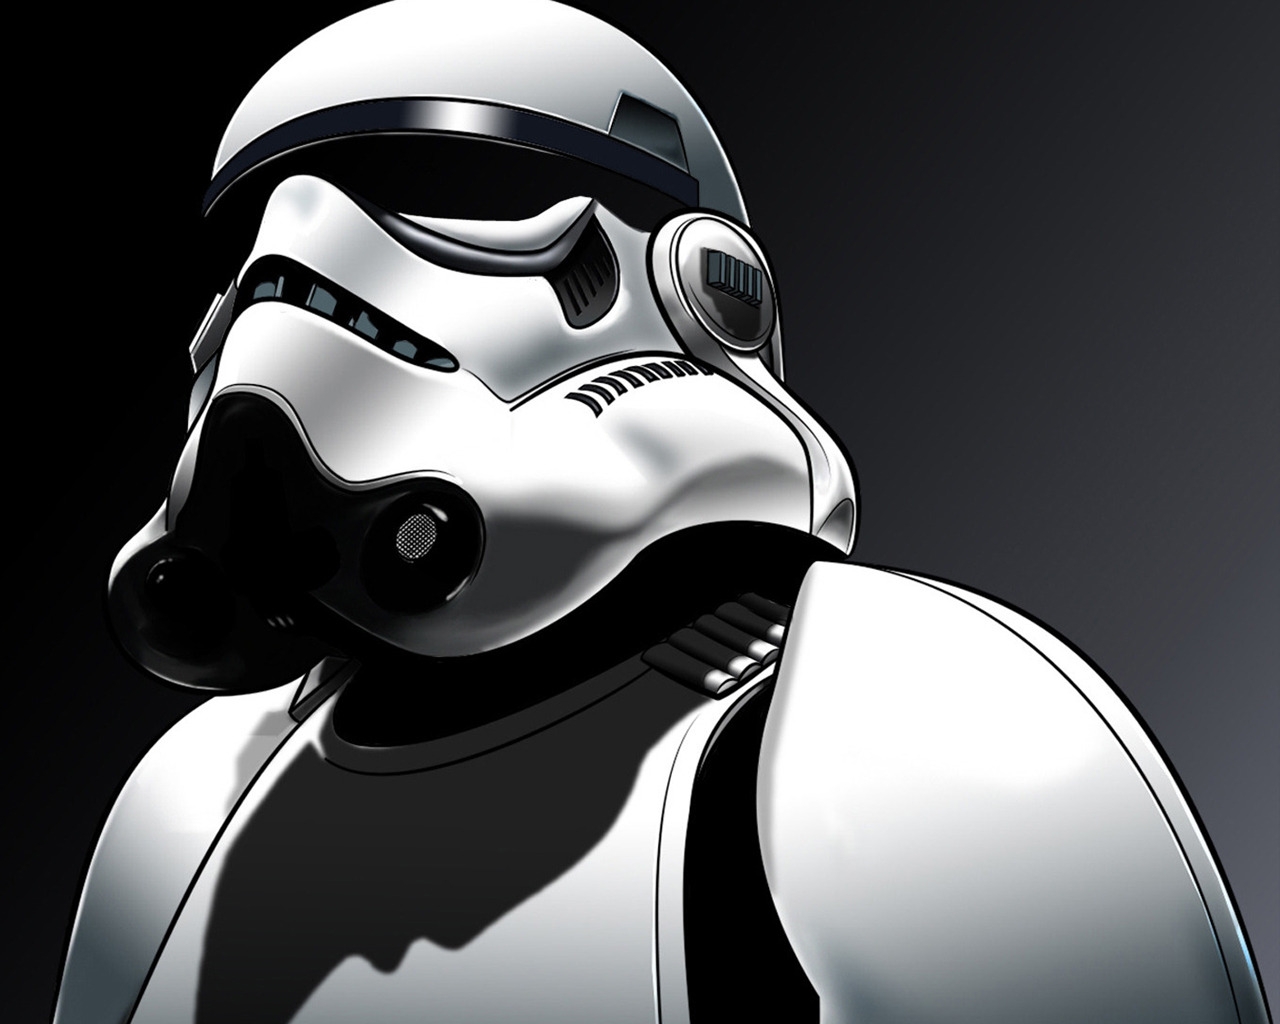 Star Wars Soldier for 1280 x 1024 resolution